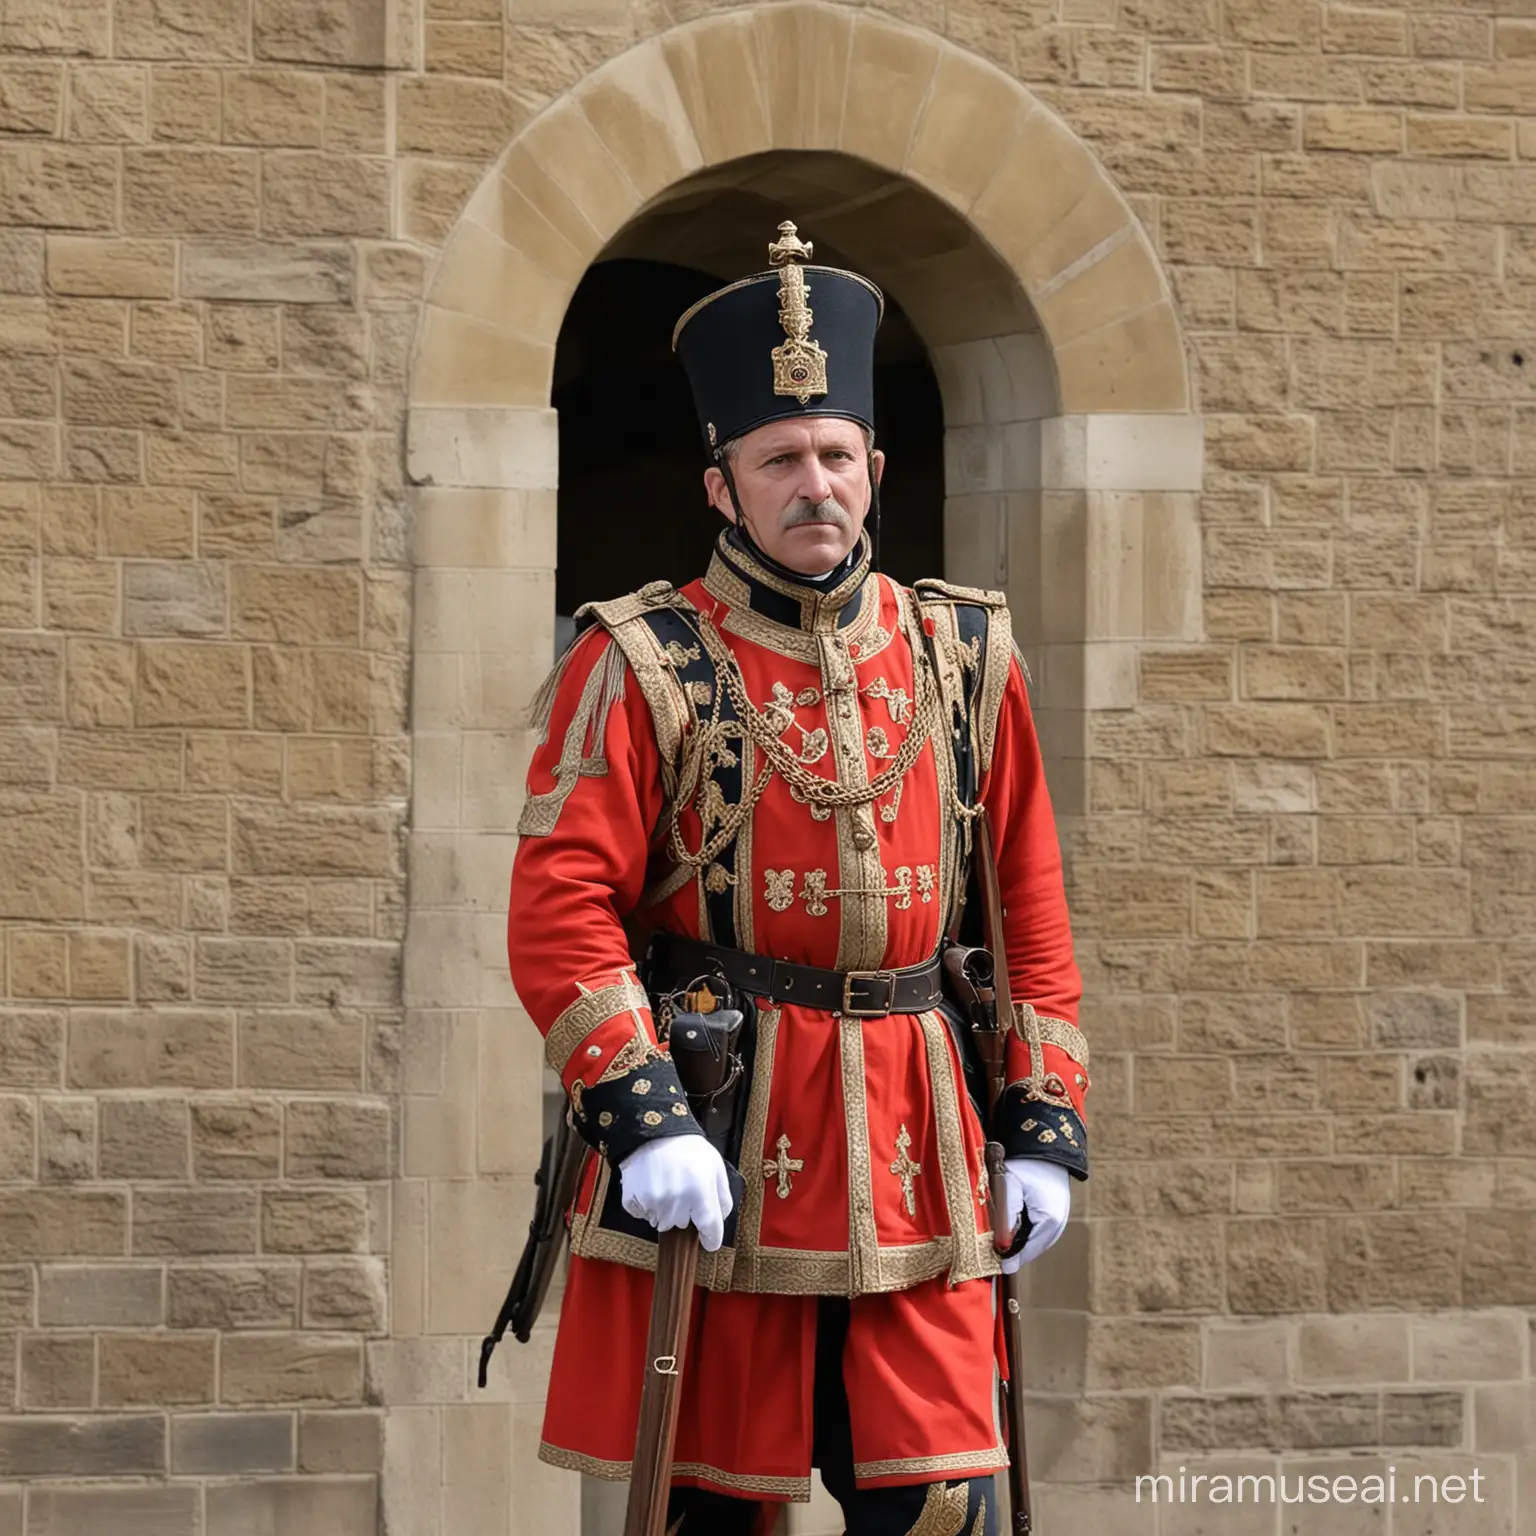 Tudor Era Guard Standing Vigil at the Tower of London